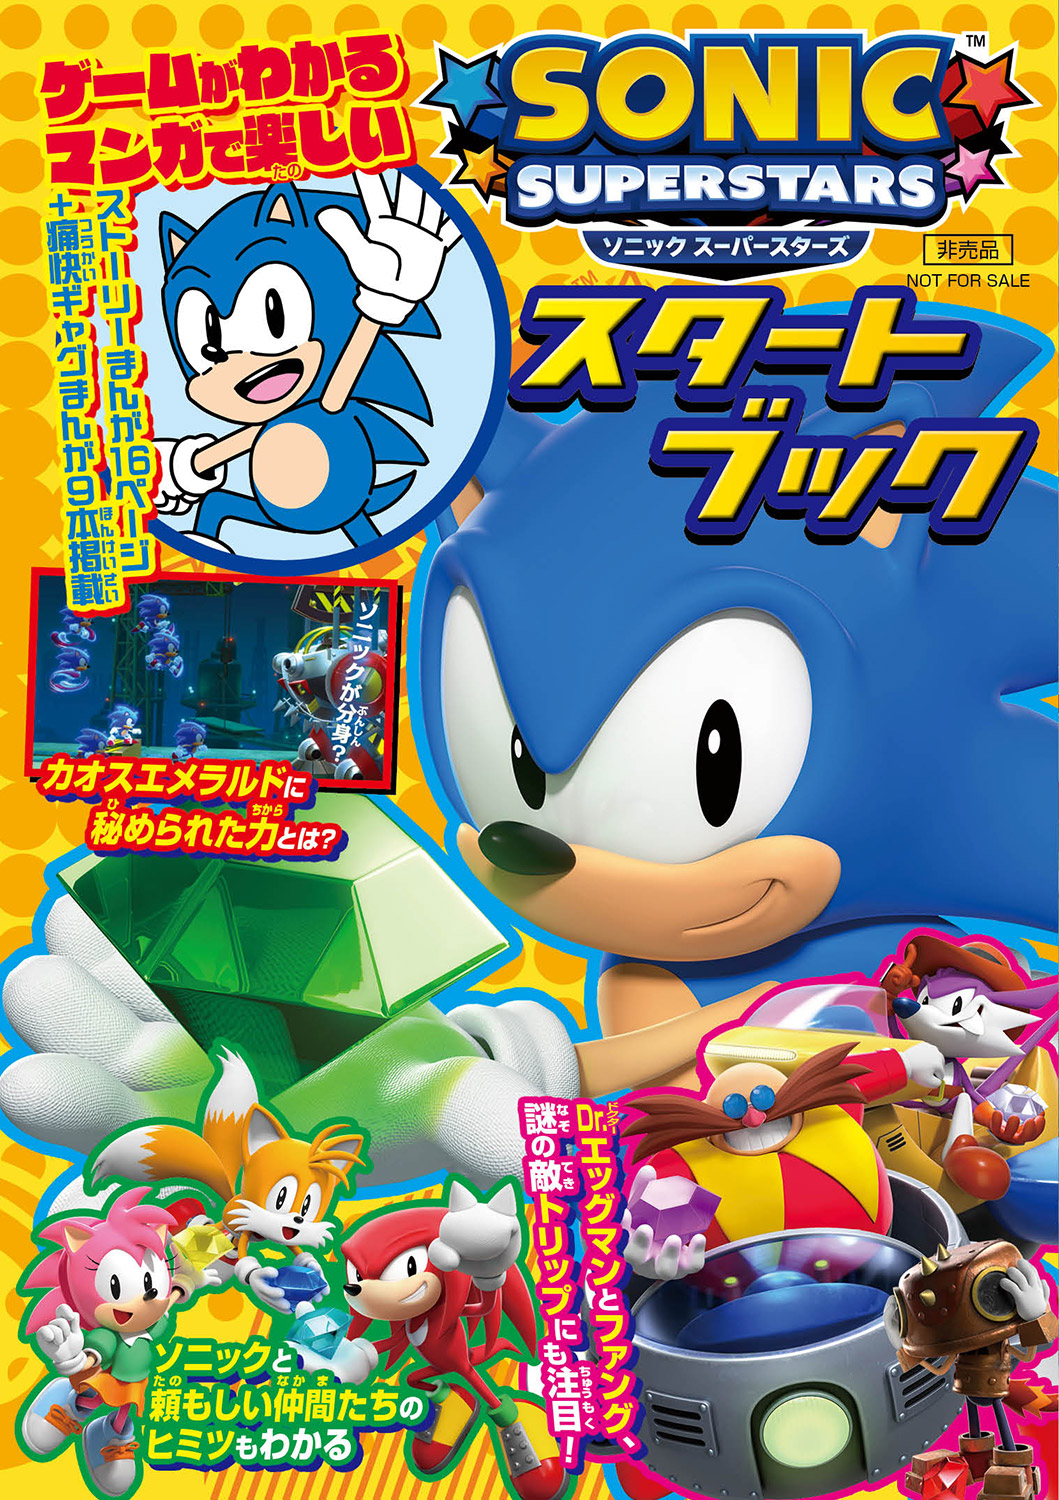 Sonic Superstars Start Book, Sonic Wiki Zone